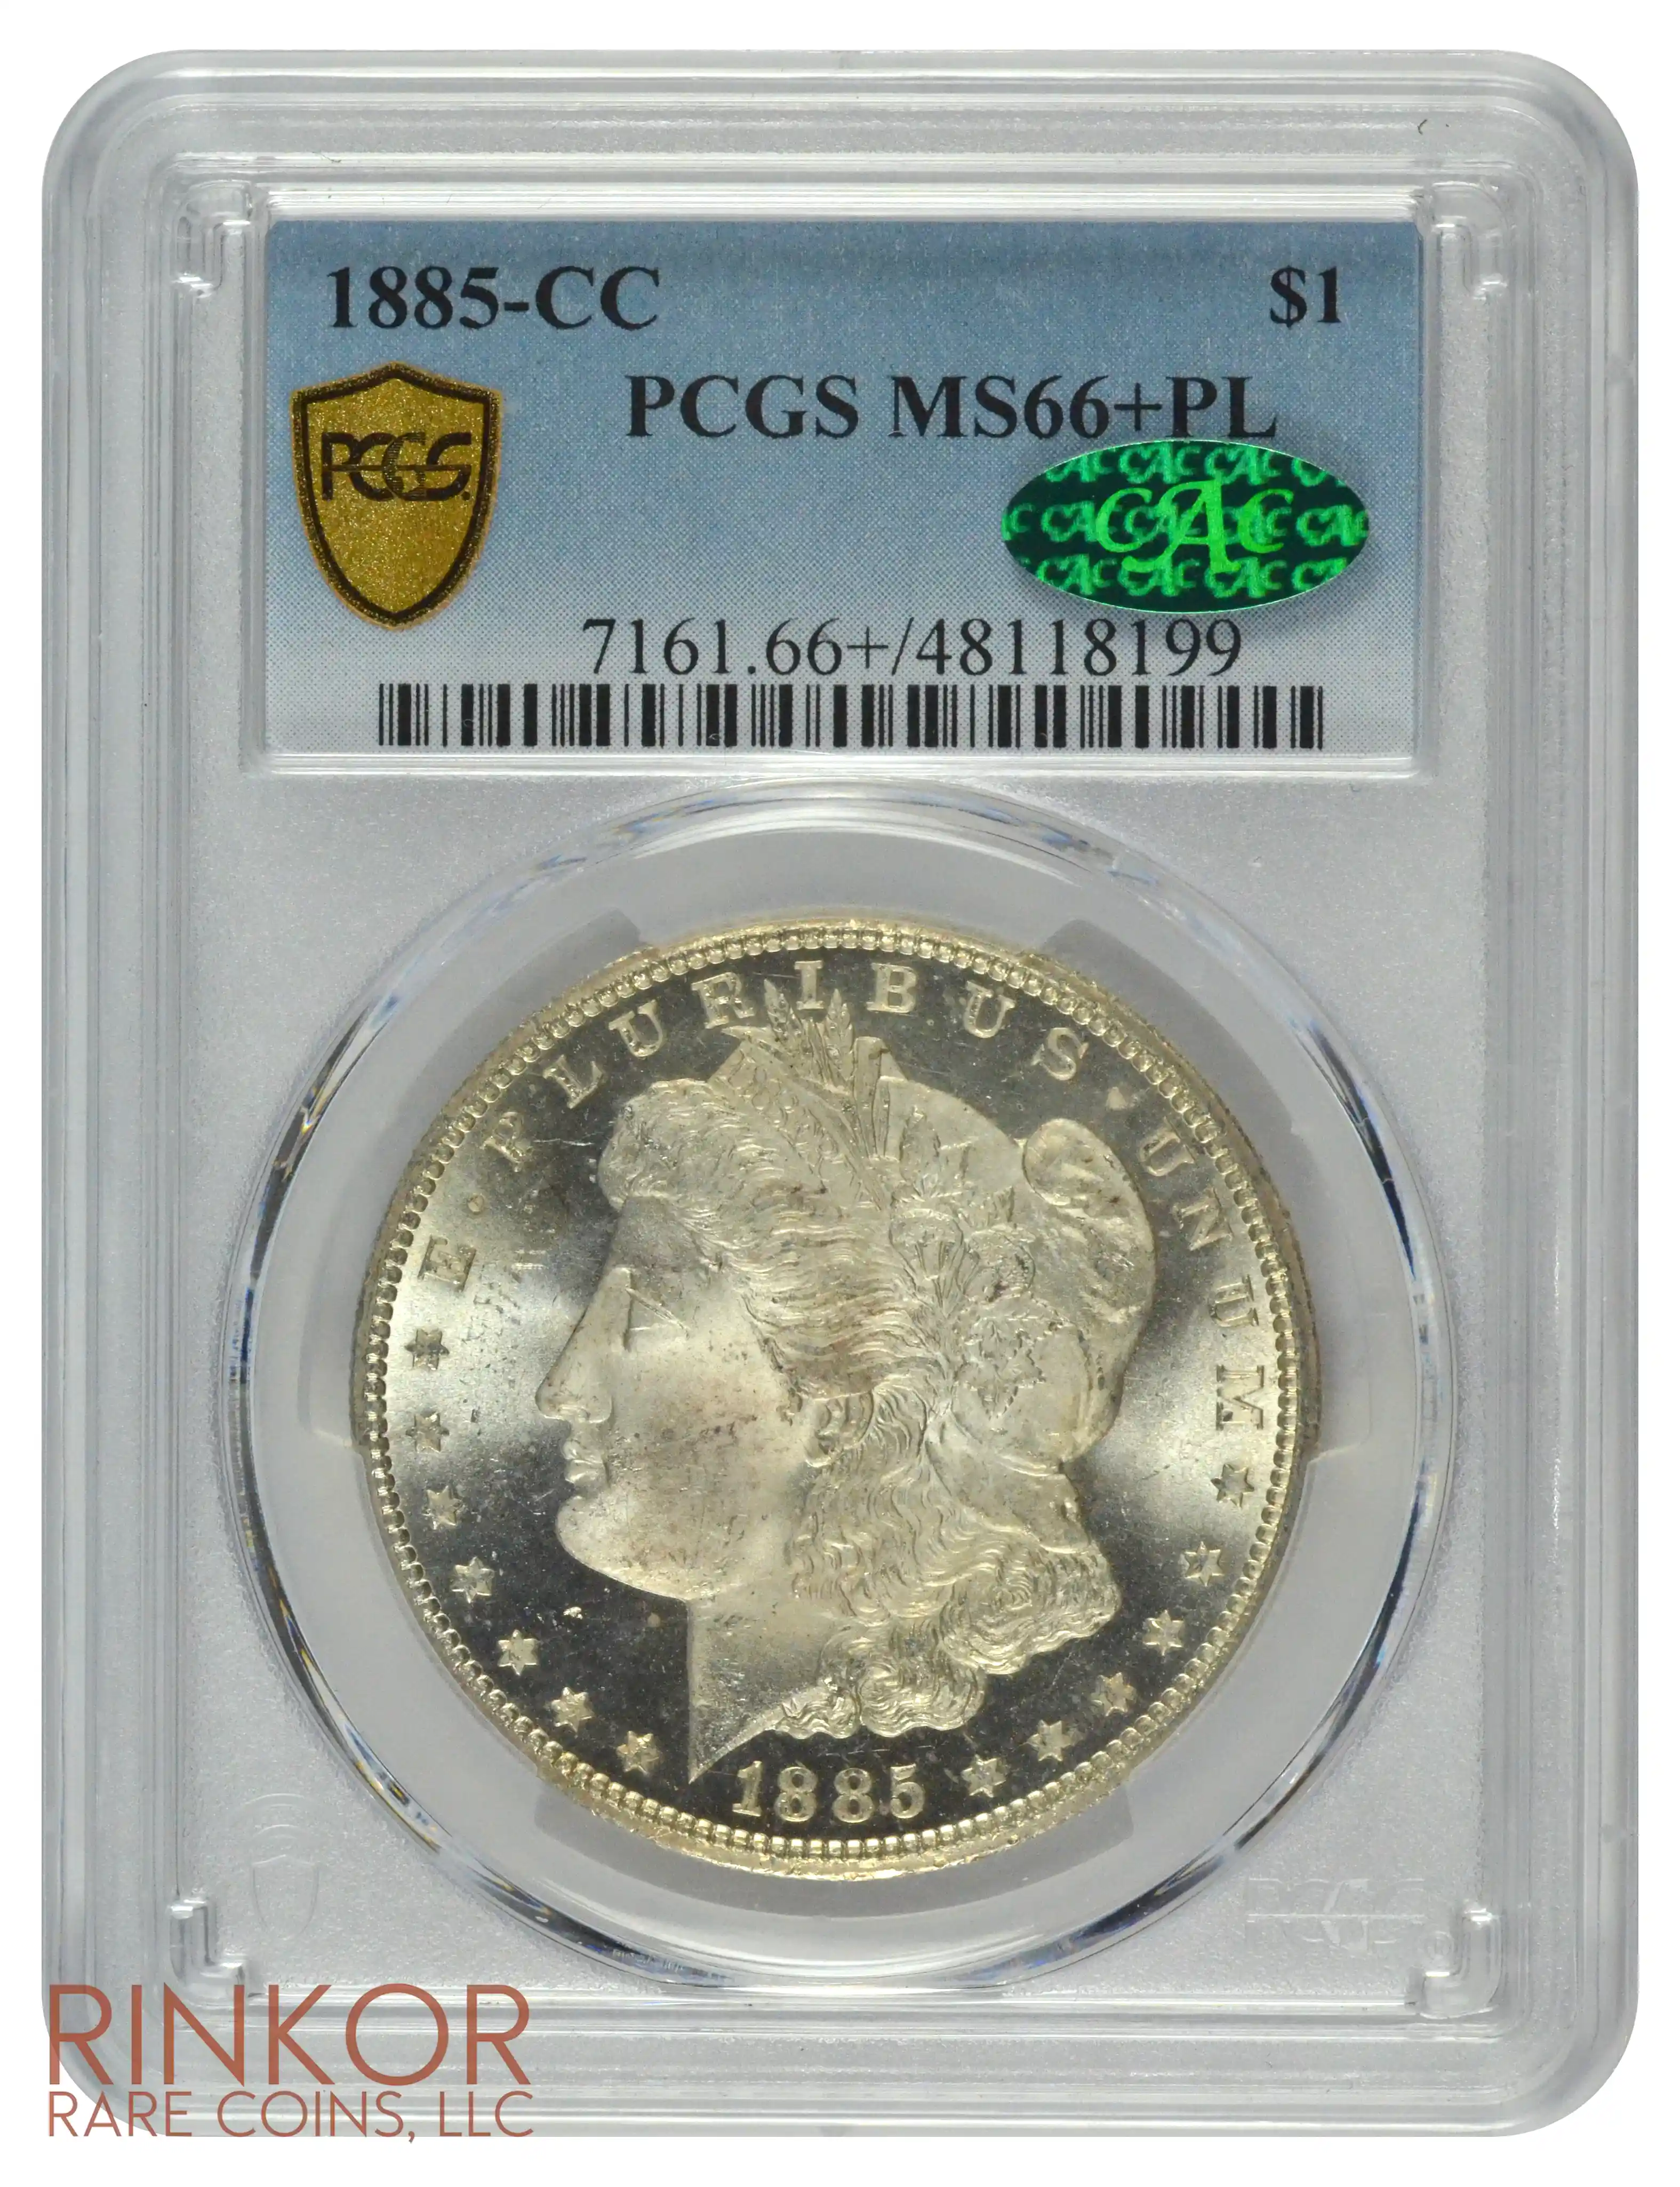 1885-CC $1 PCGS MS 66+ PL CAC